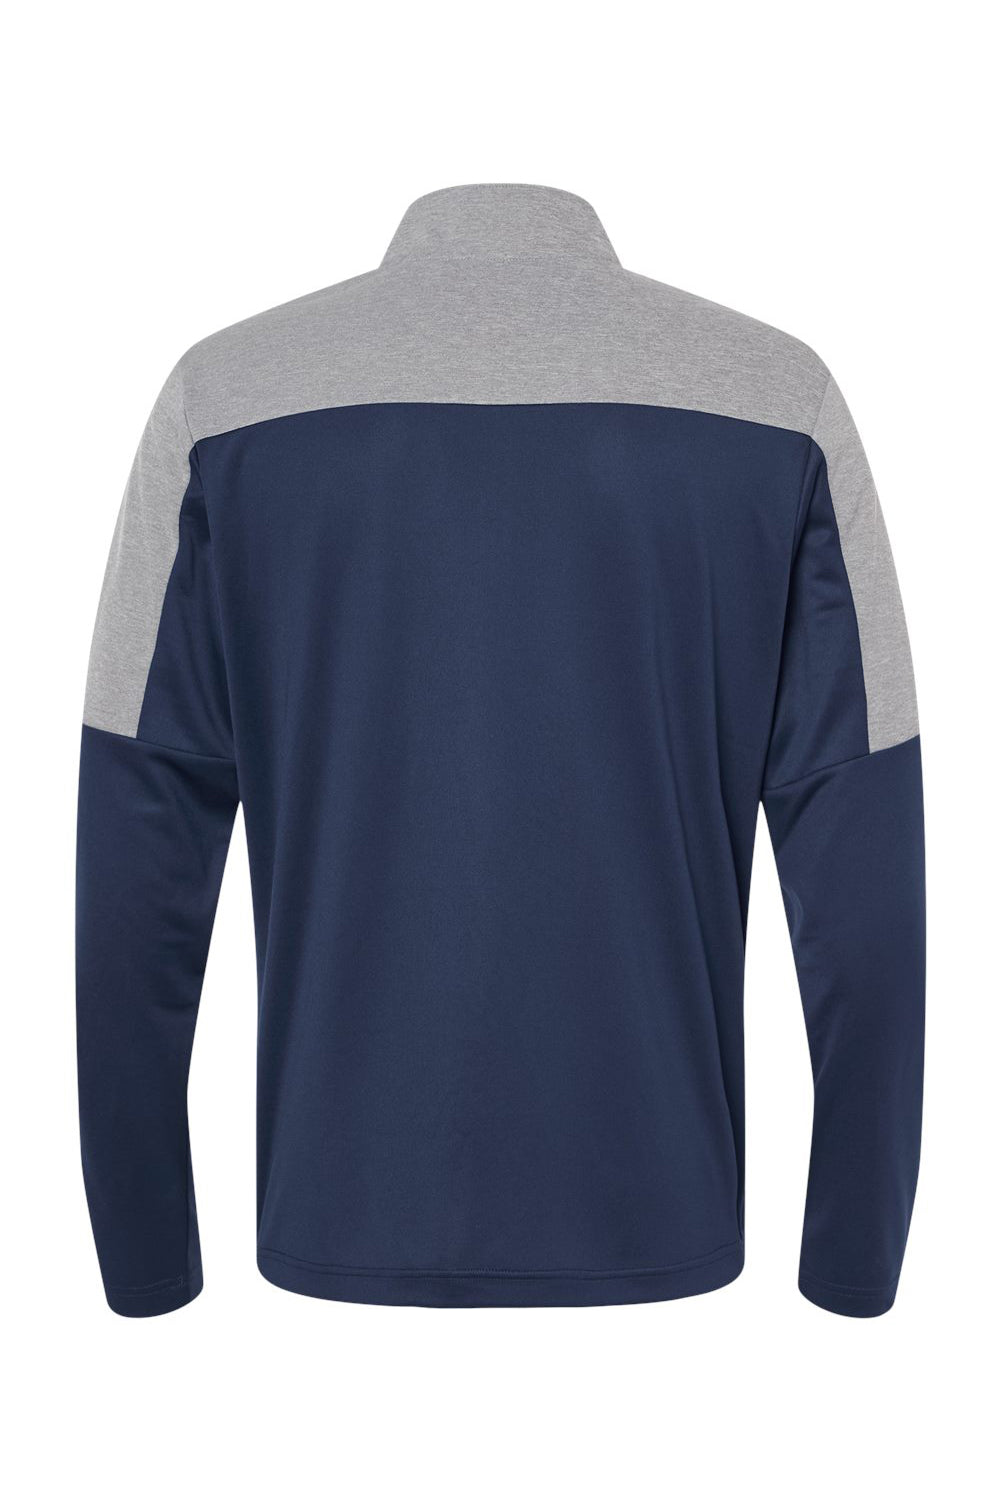 Adidas A552 Mens 1/4 Zip Sweatshirt Collegiate Navy Blue/Grey Melange Flat Back